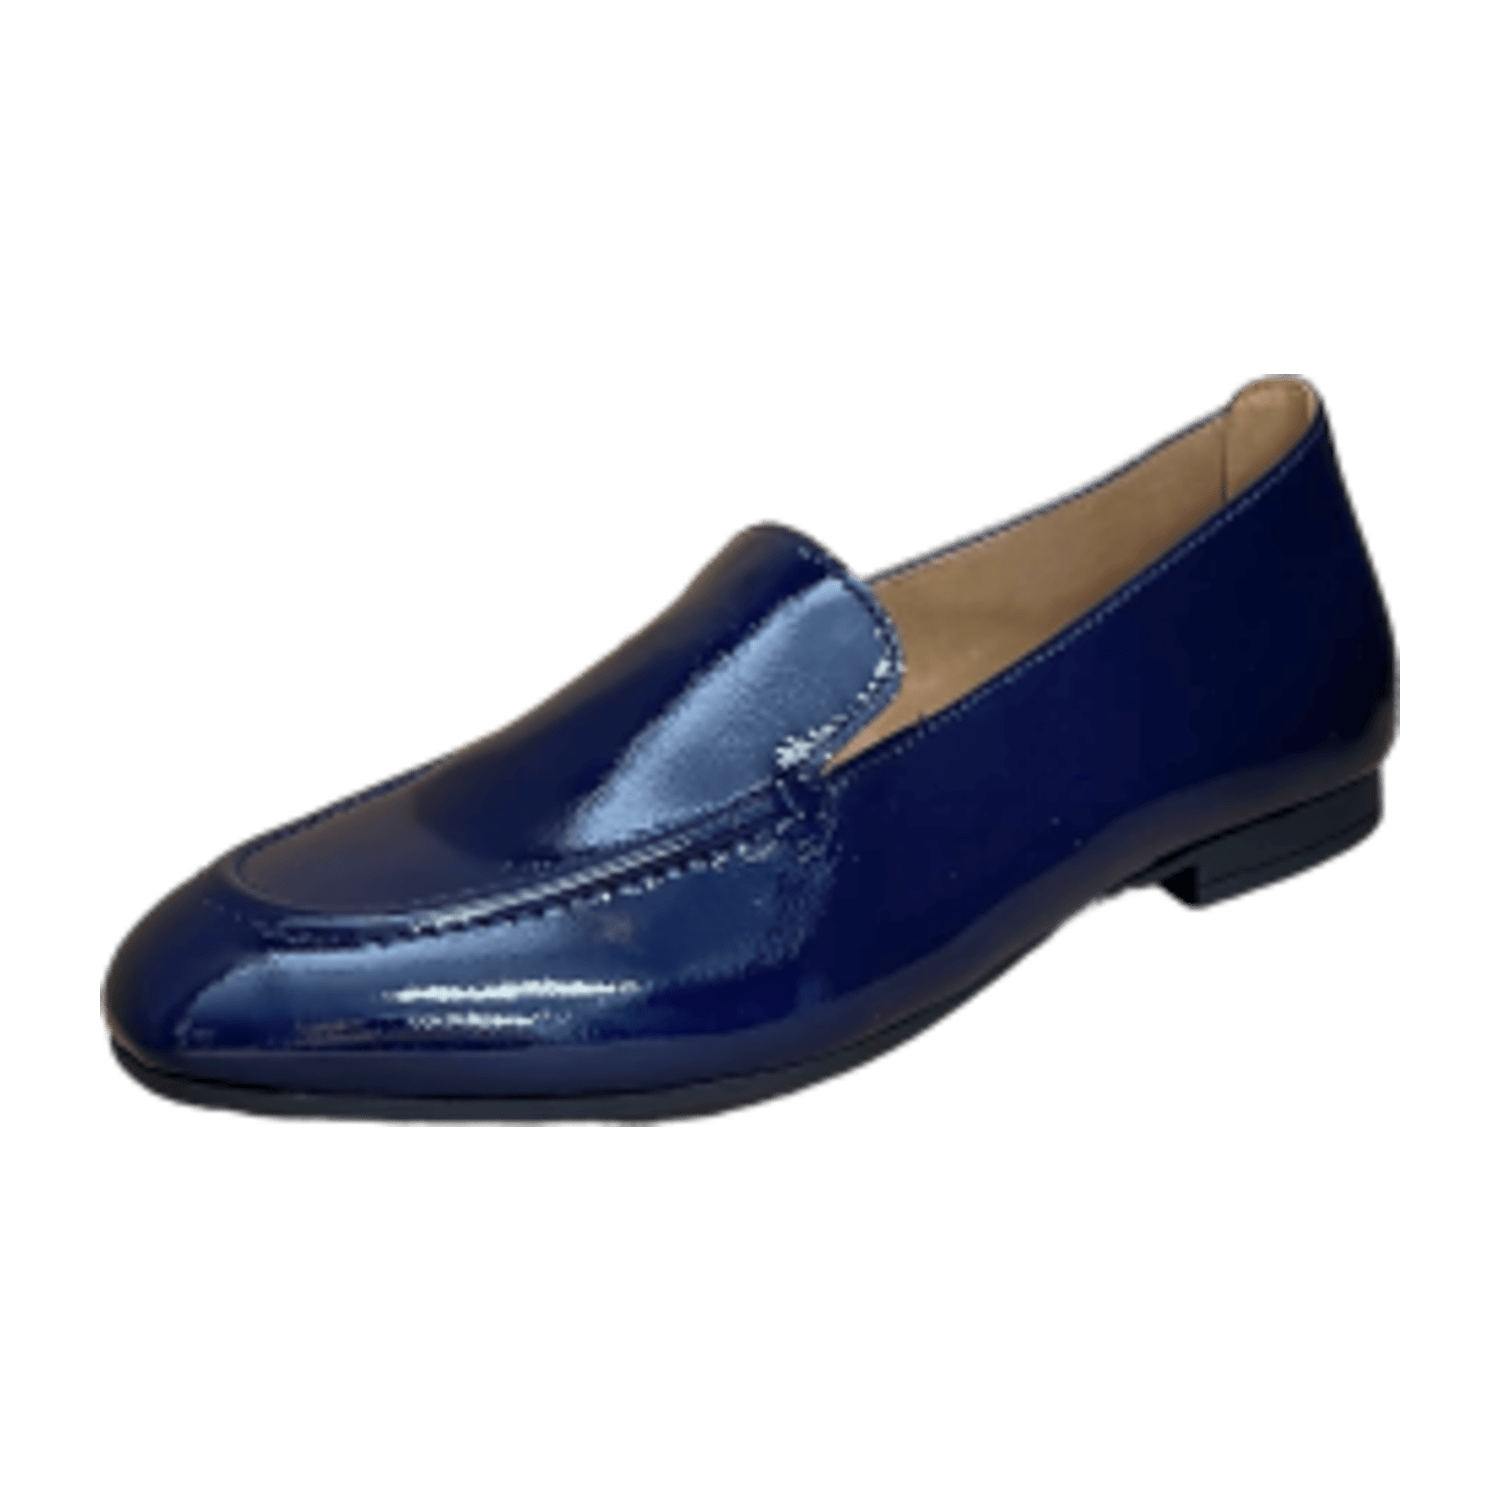 Gabor Schuhe Slipper blau Lack Mokassin 45.214.96